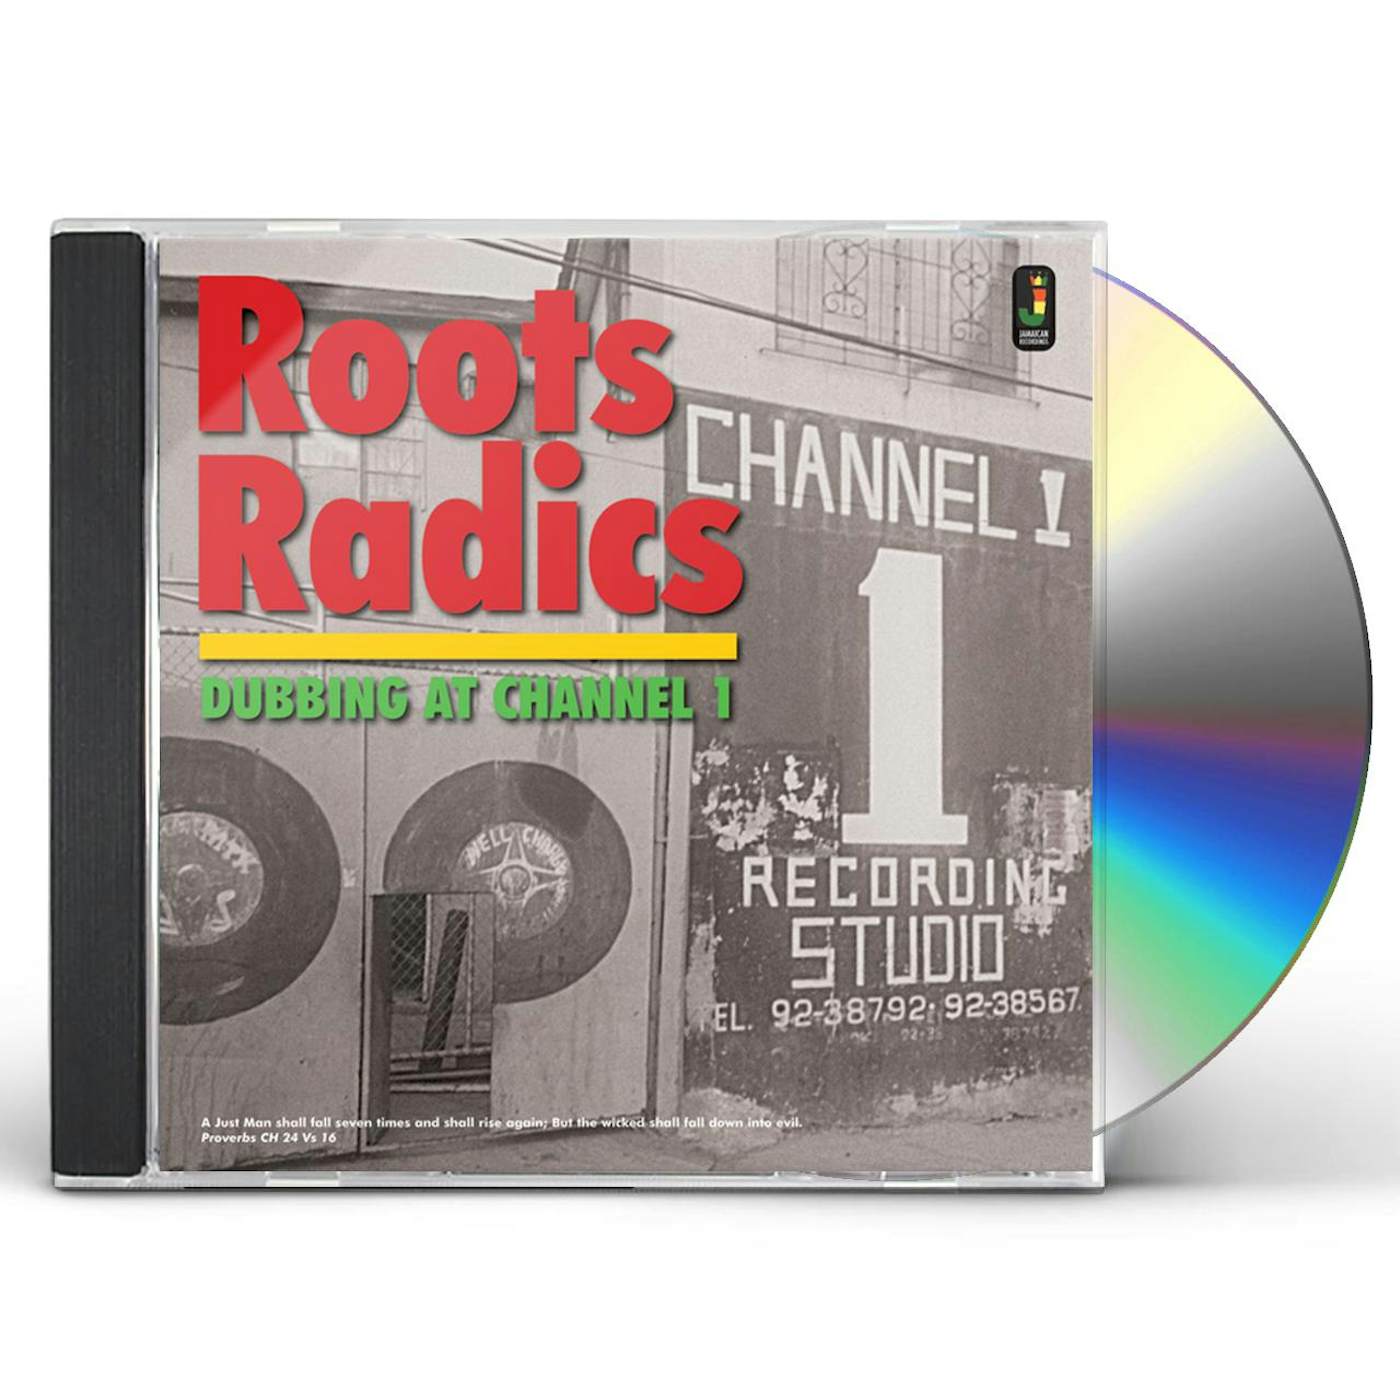 Roots Radics DUBBING AT CHANNEL 1 CD